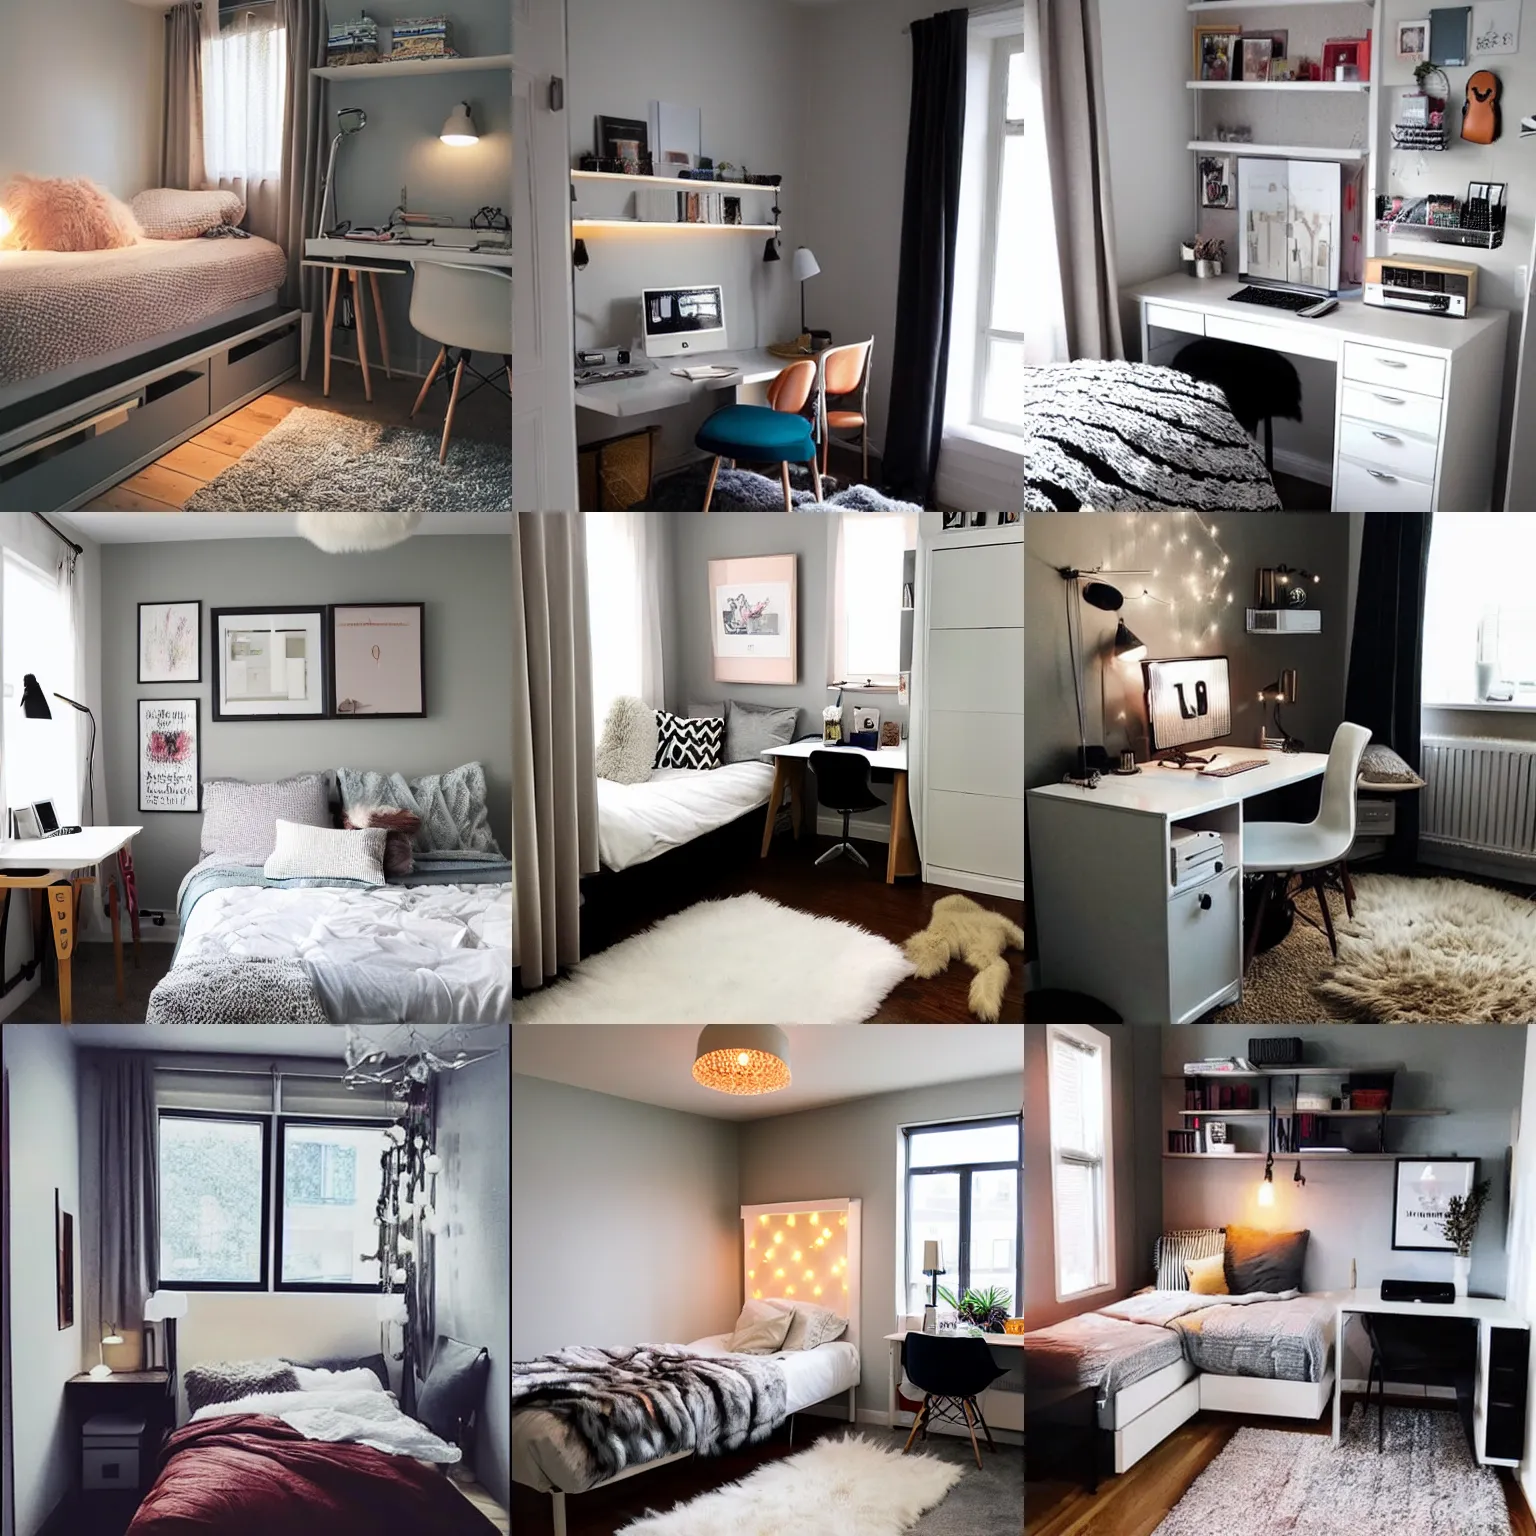 Prompt: 6 0 sqft small bedroom design, cozy, retro lights, computer desk, wardrobe, fur rug